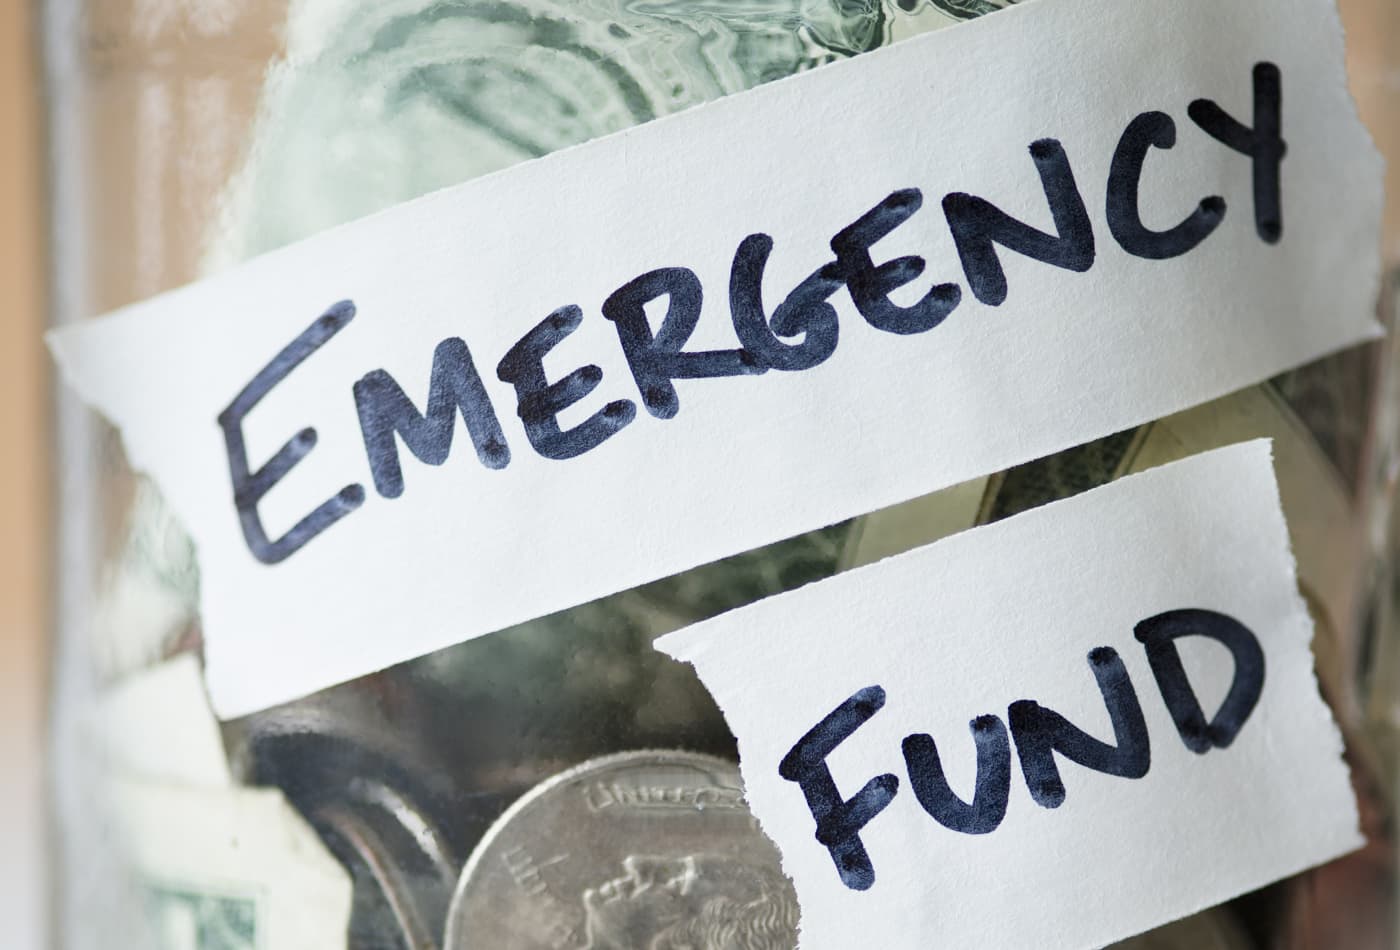 No emergency savings? New workplace benefits aim to help